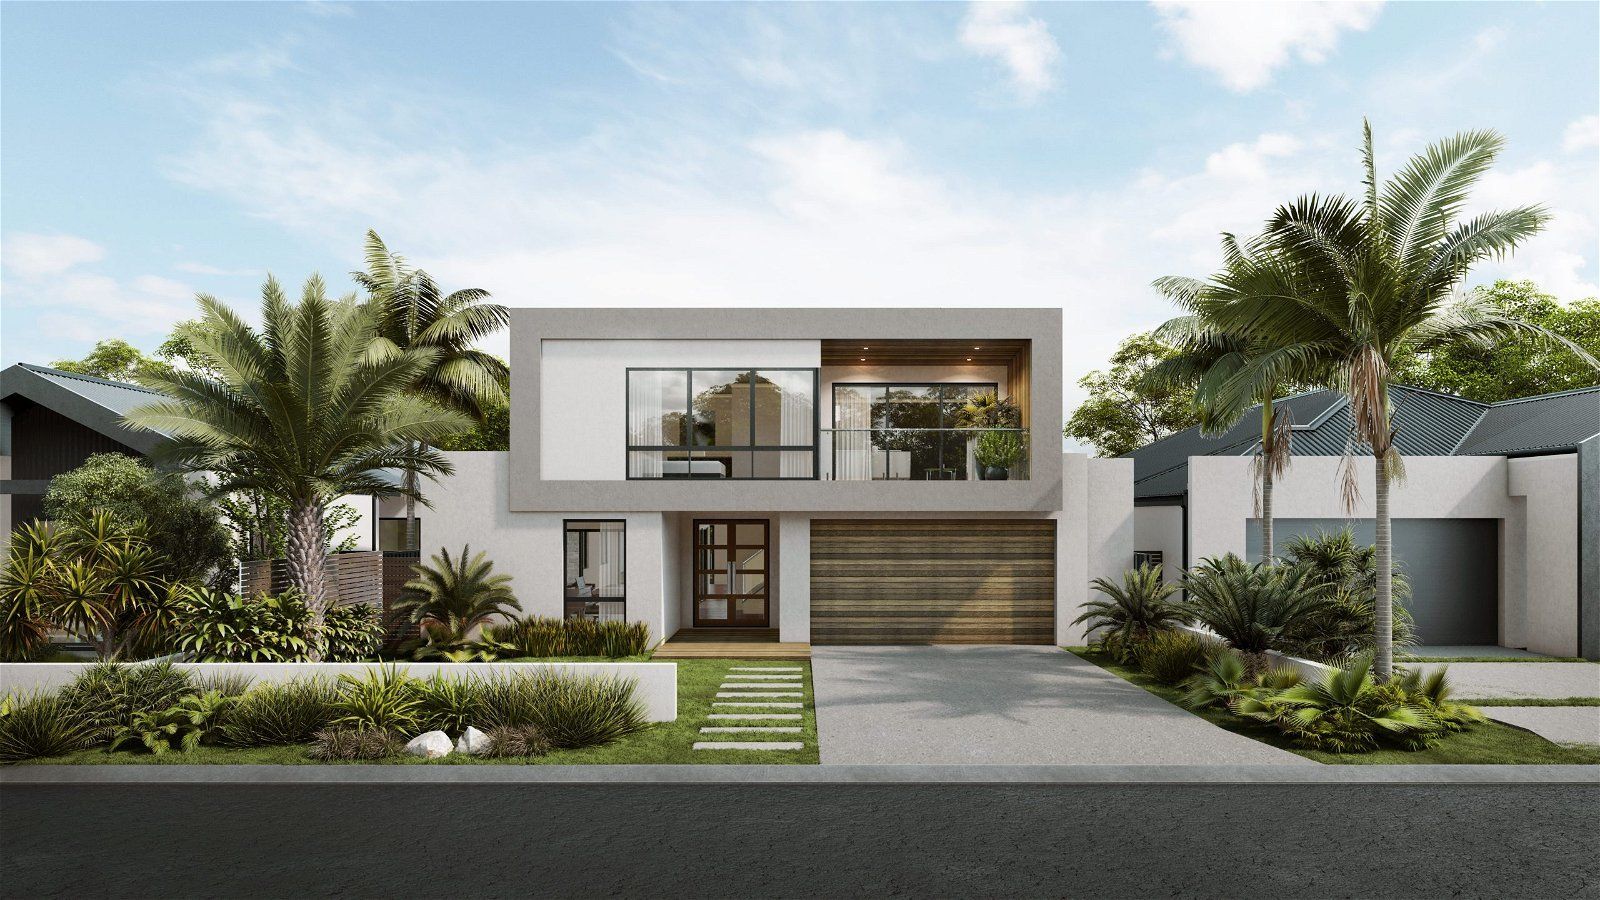 4 bedrooms New House & Land in Varadero BURNS BEACH WA, 6028